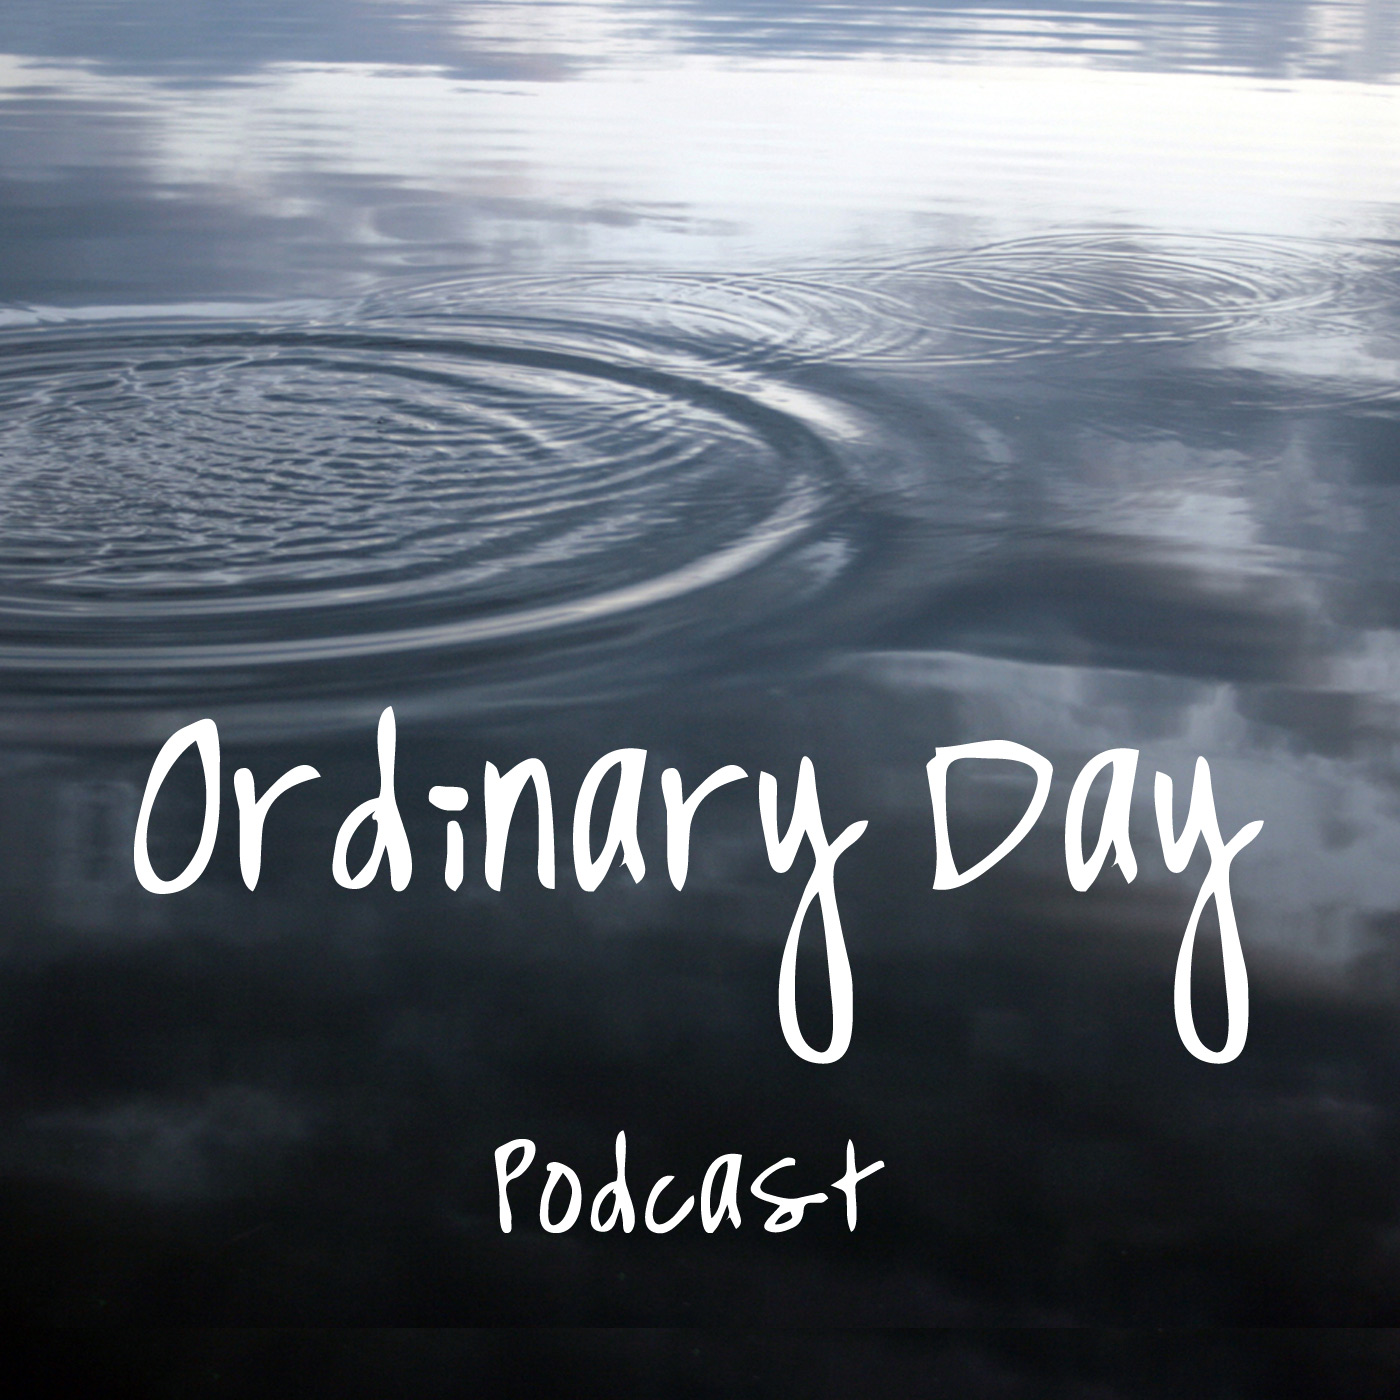 Ordinary Day Podcast